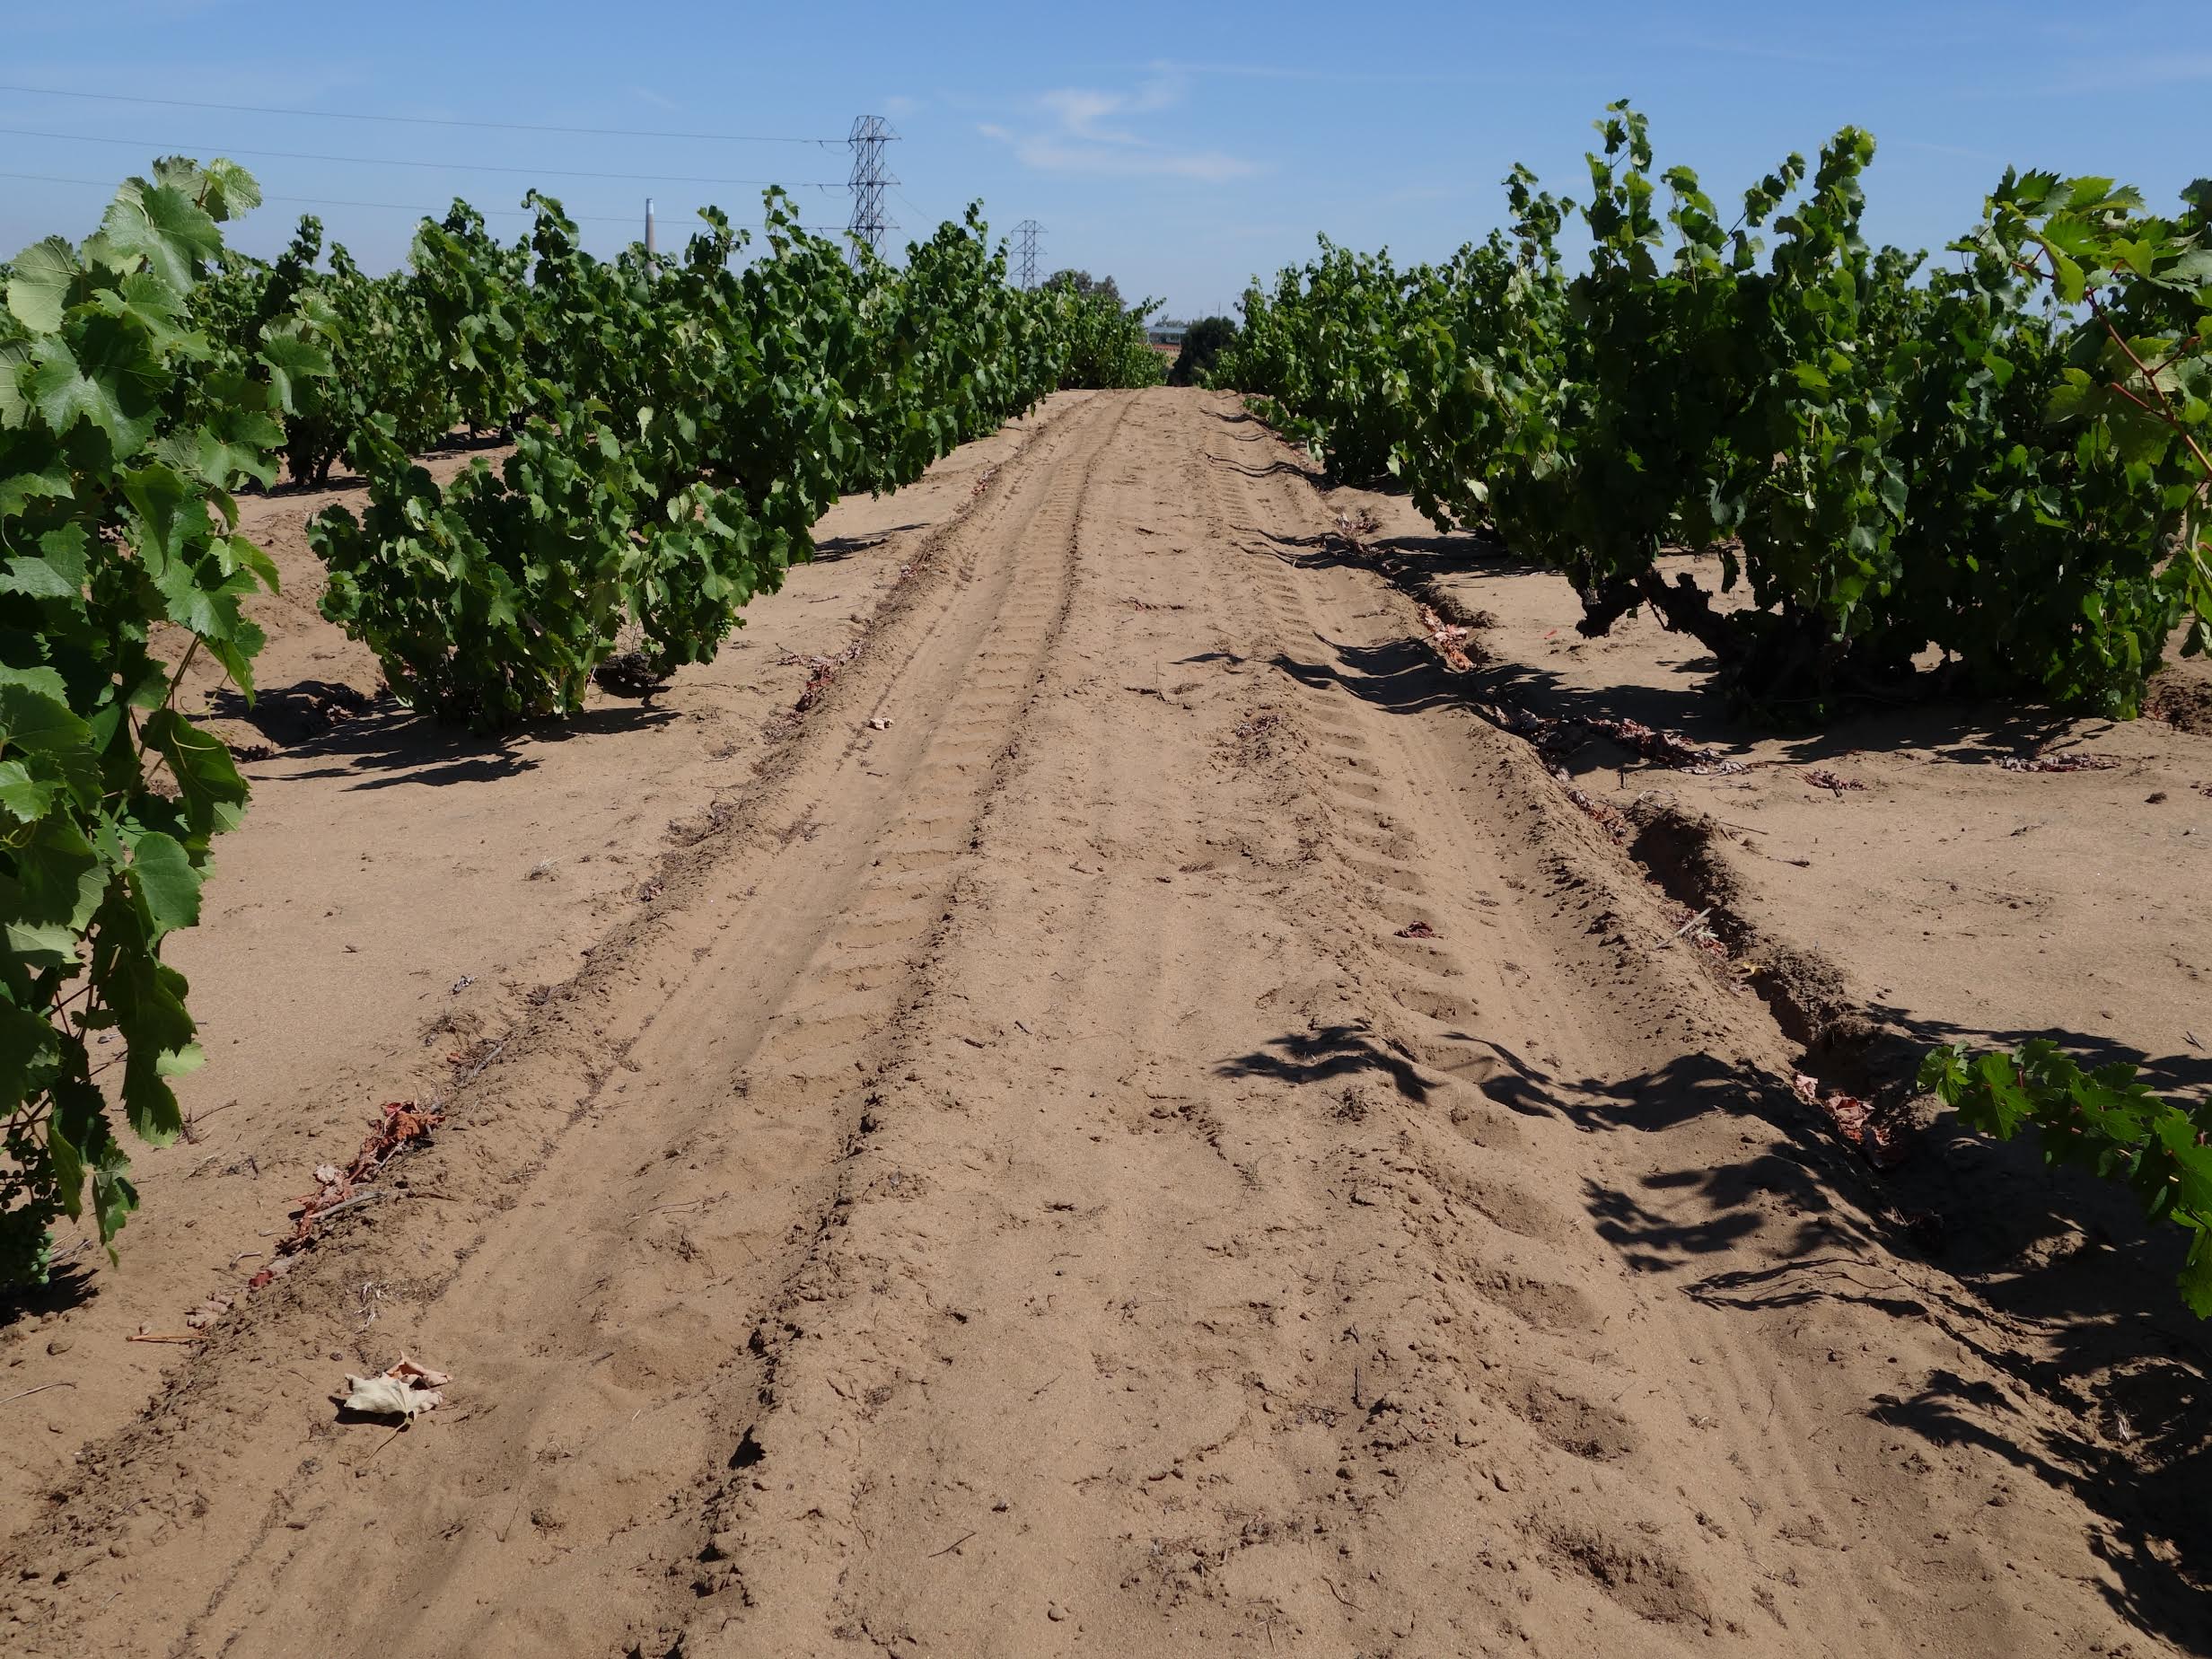 Tractor tracks in the Delhi sand at Oakley Road Vineyard, Contra Costa County.